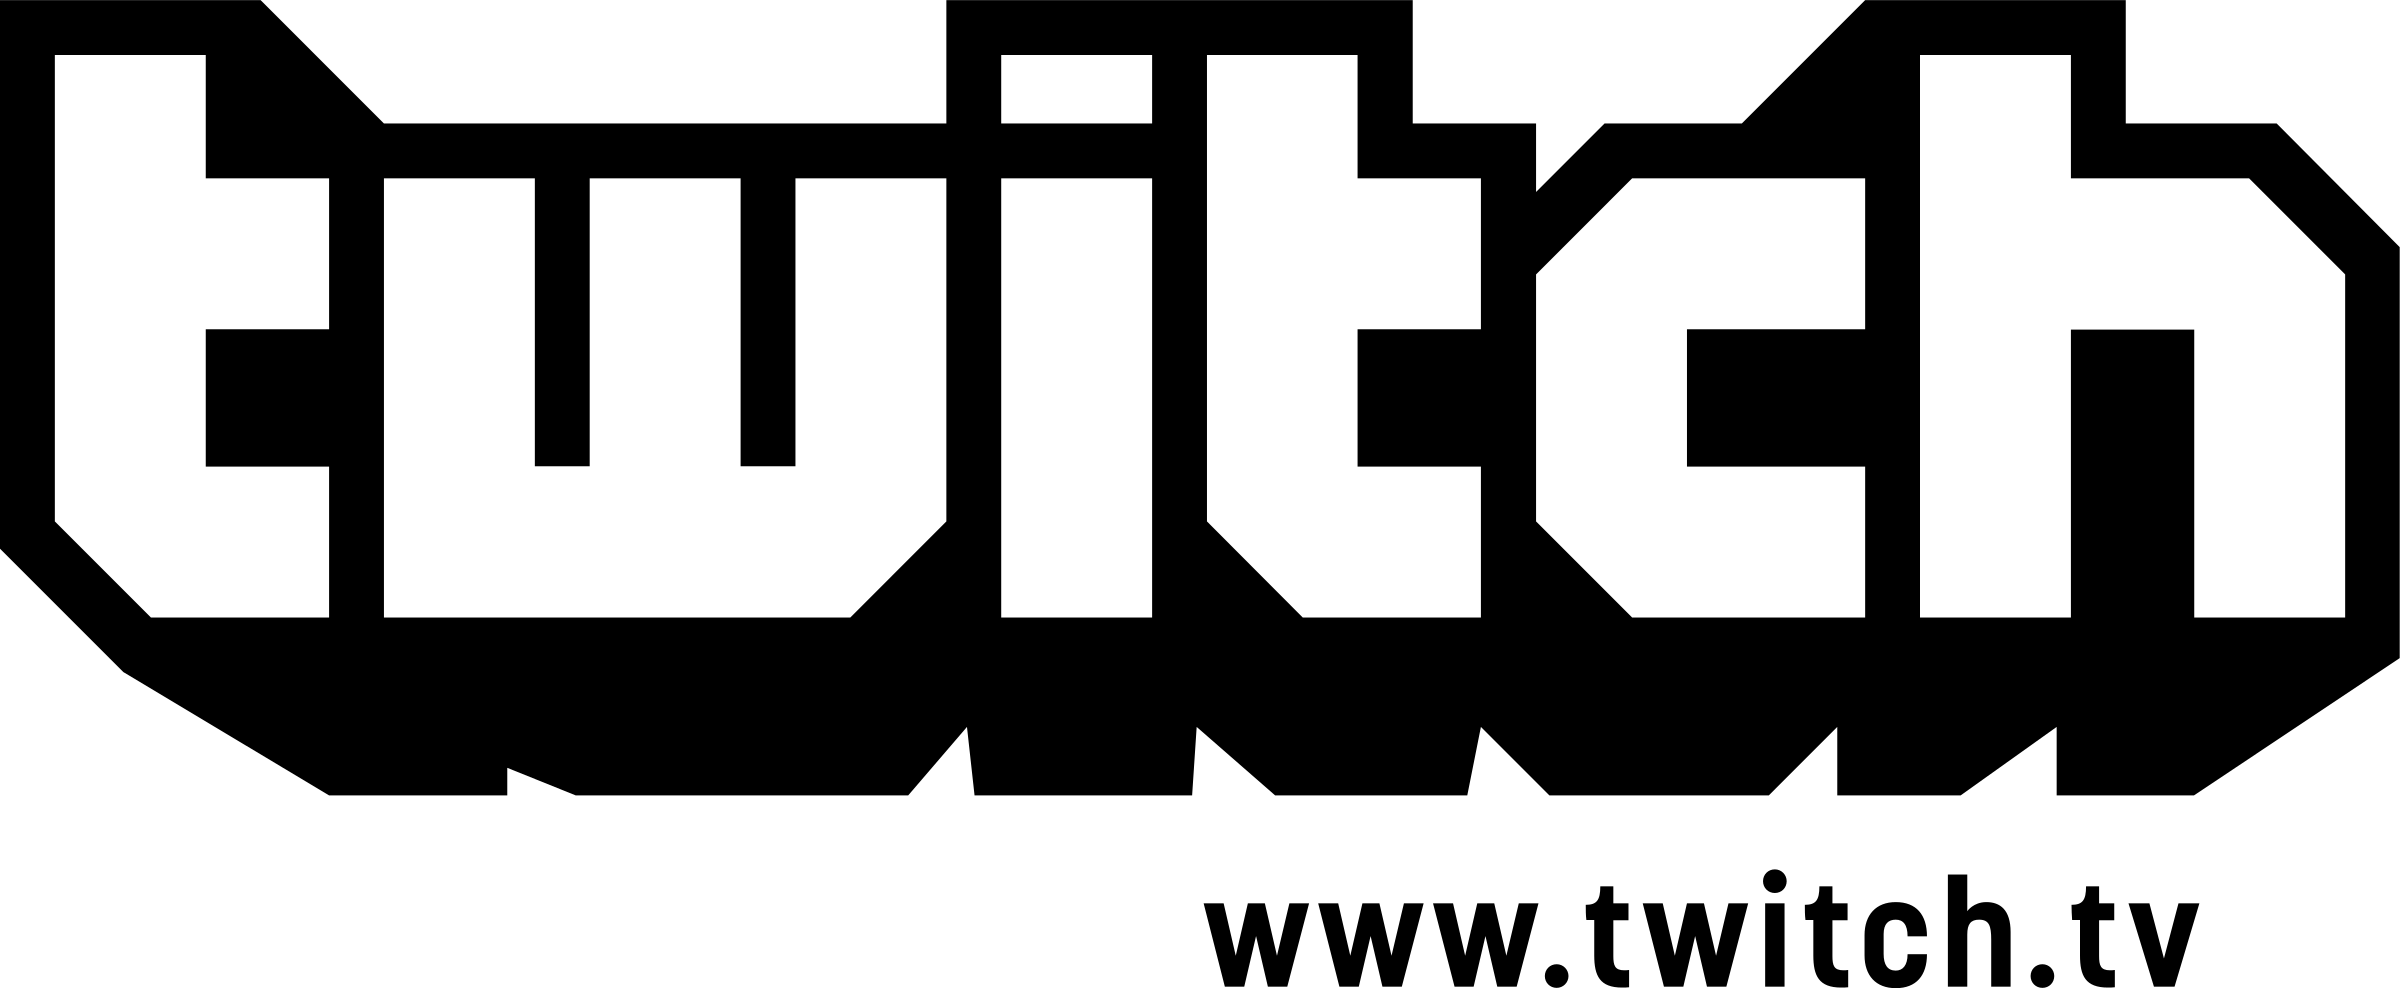 Twitch Logo PNG Transparent & SVG Vector - Freebie Supply - Black and White Twitch Logo Transparent